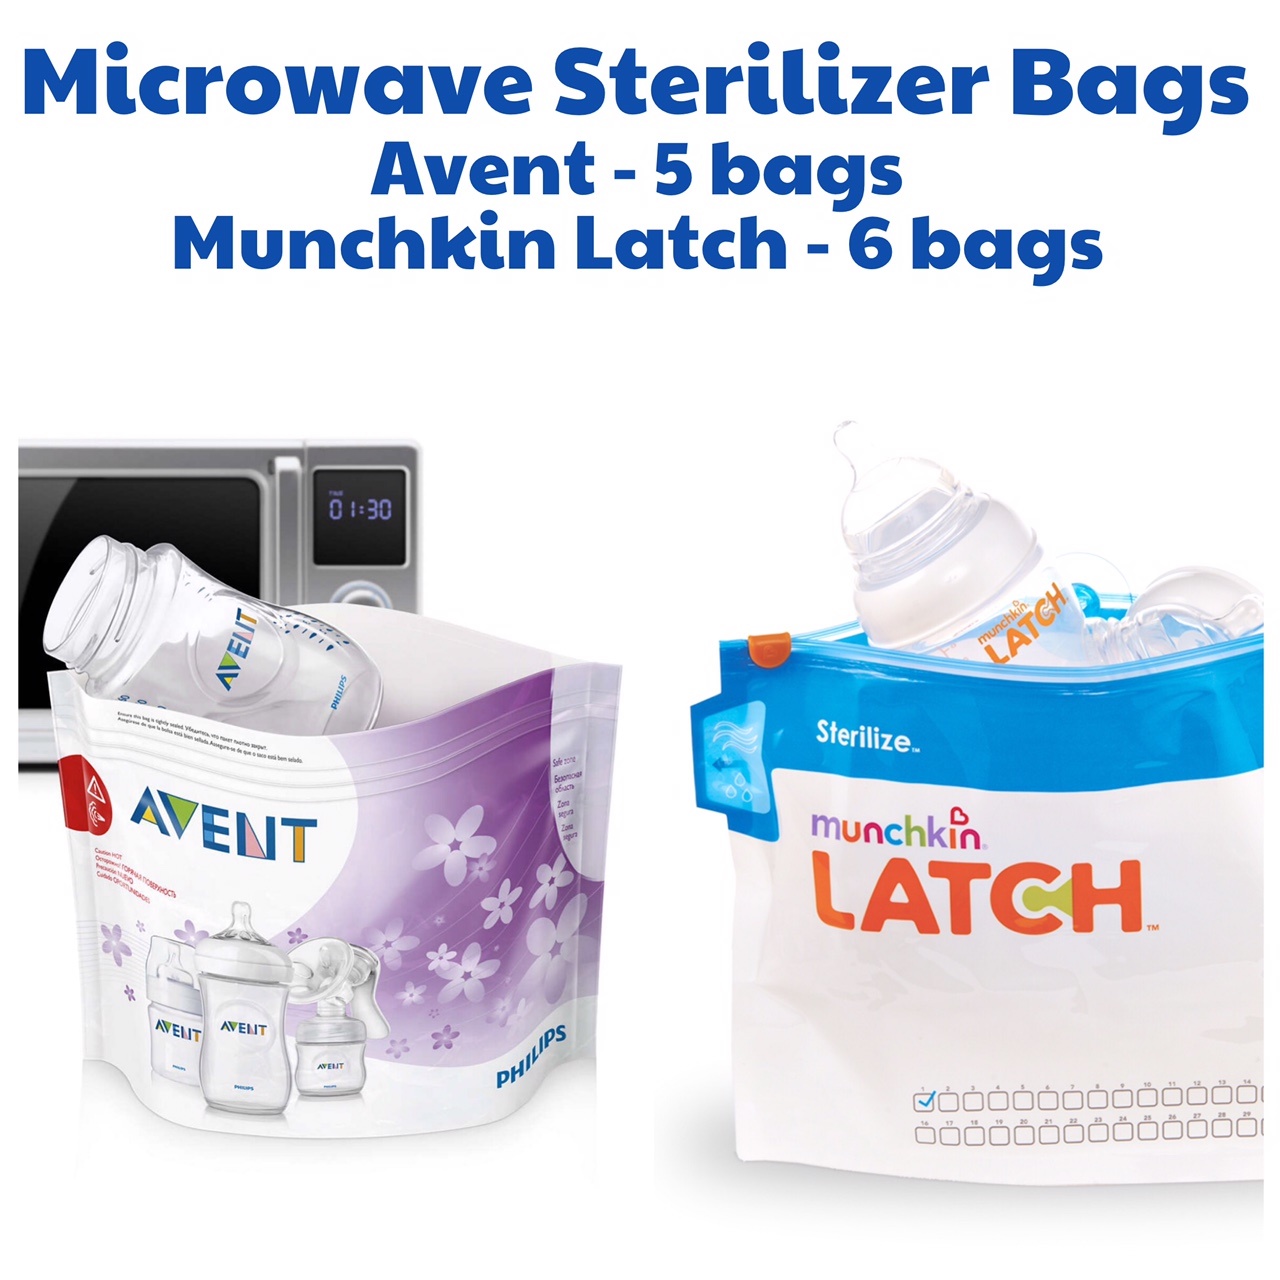 munchkin latch microwave steriliser